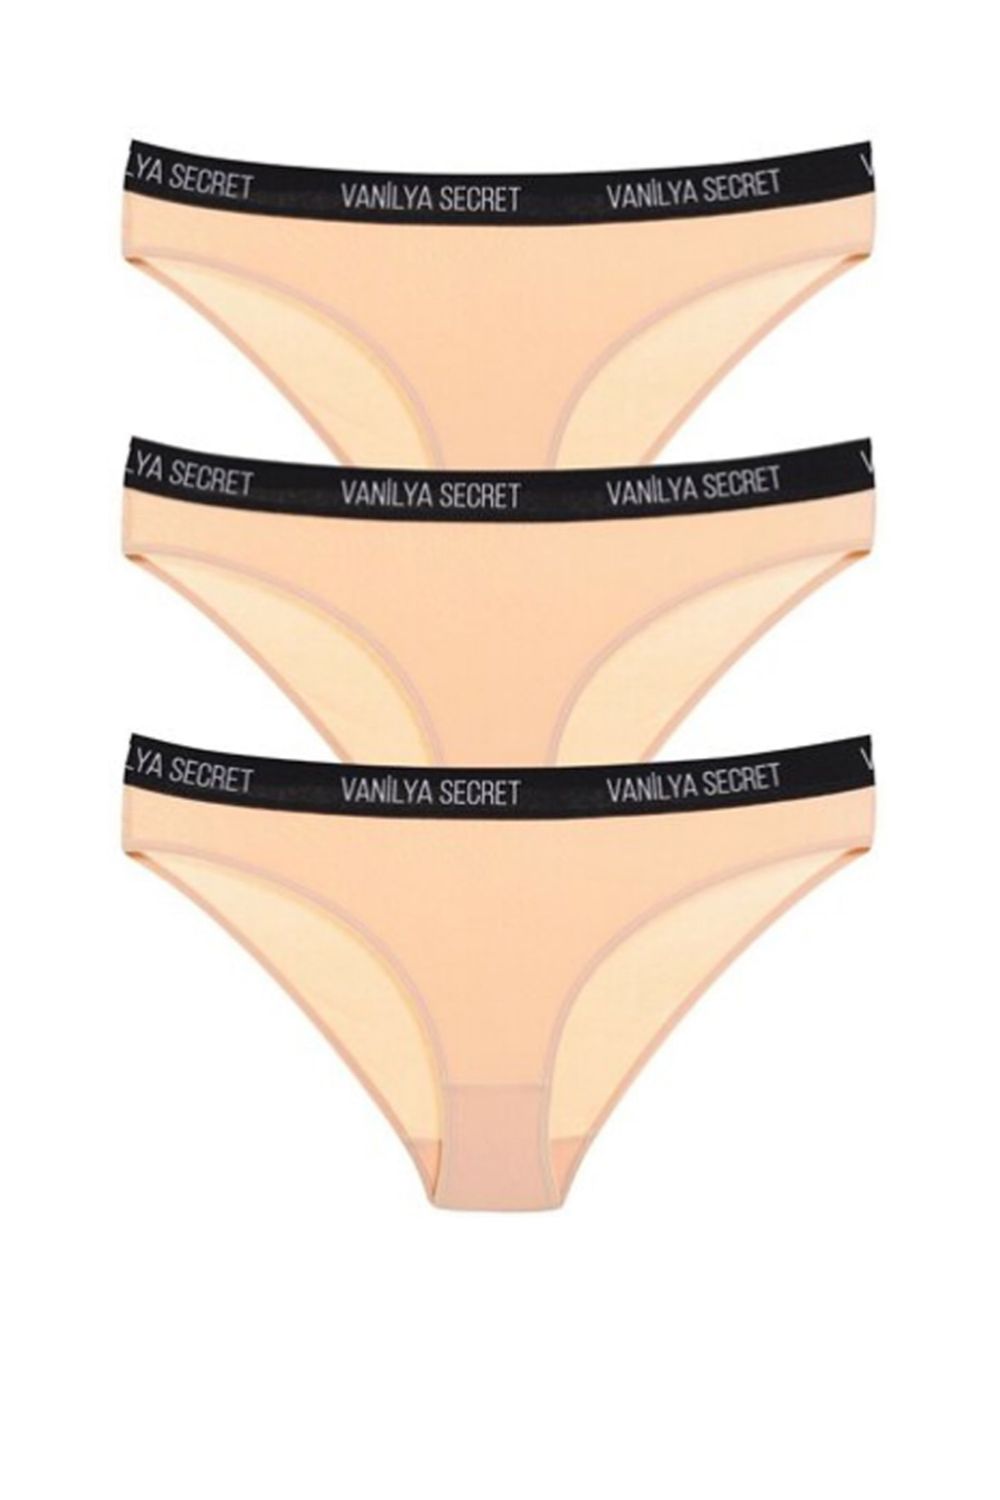 Vanilya Secret Women's Classic Panties with Elastic Waistband